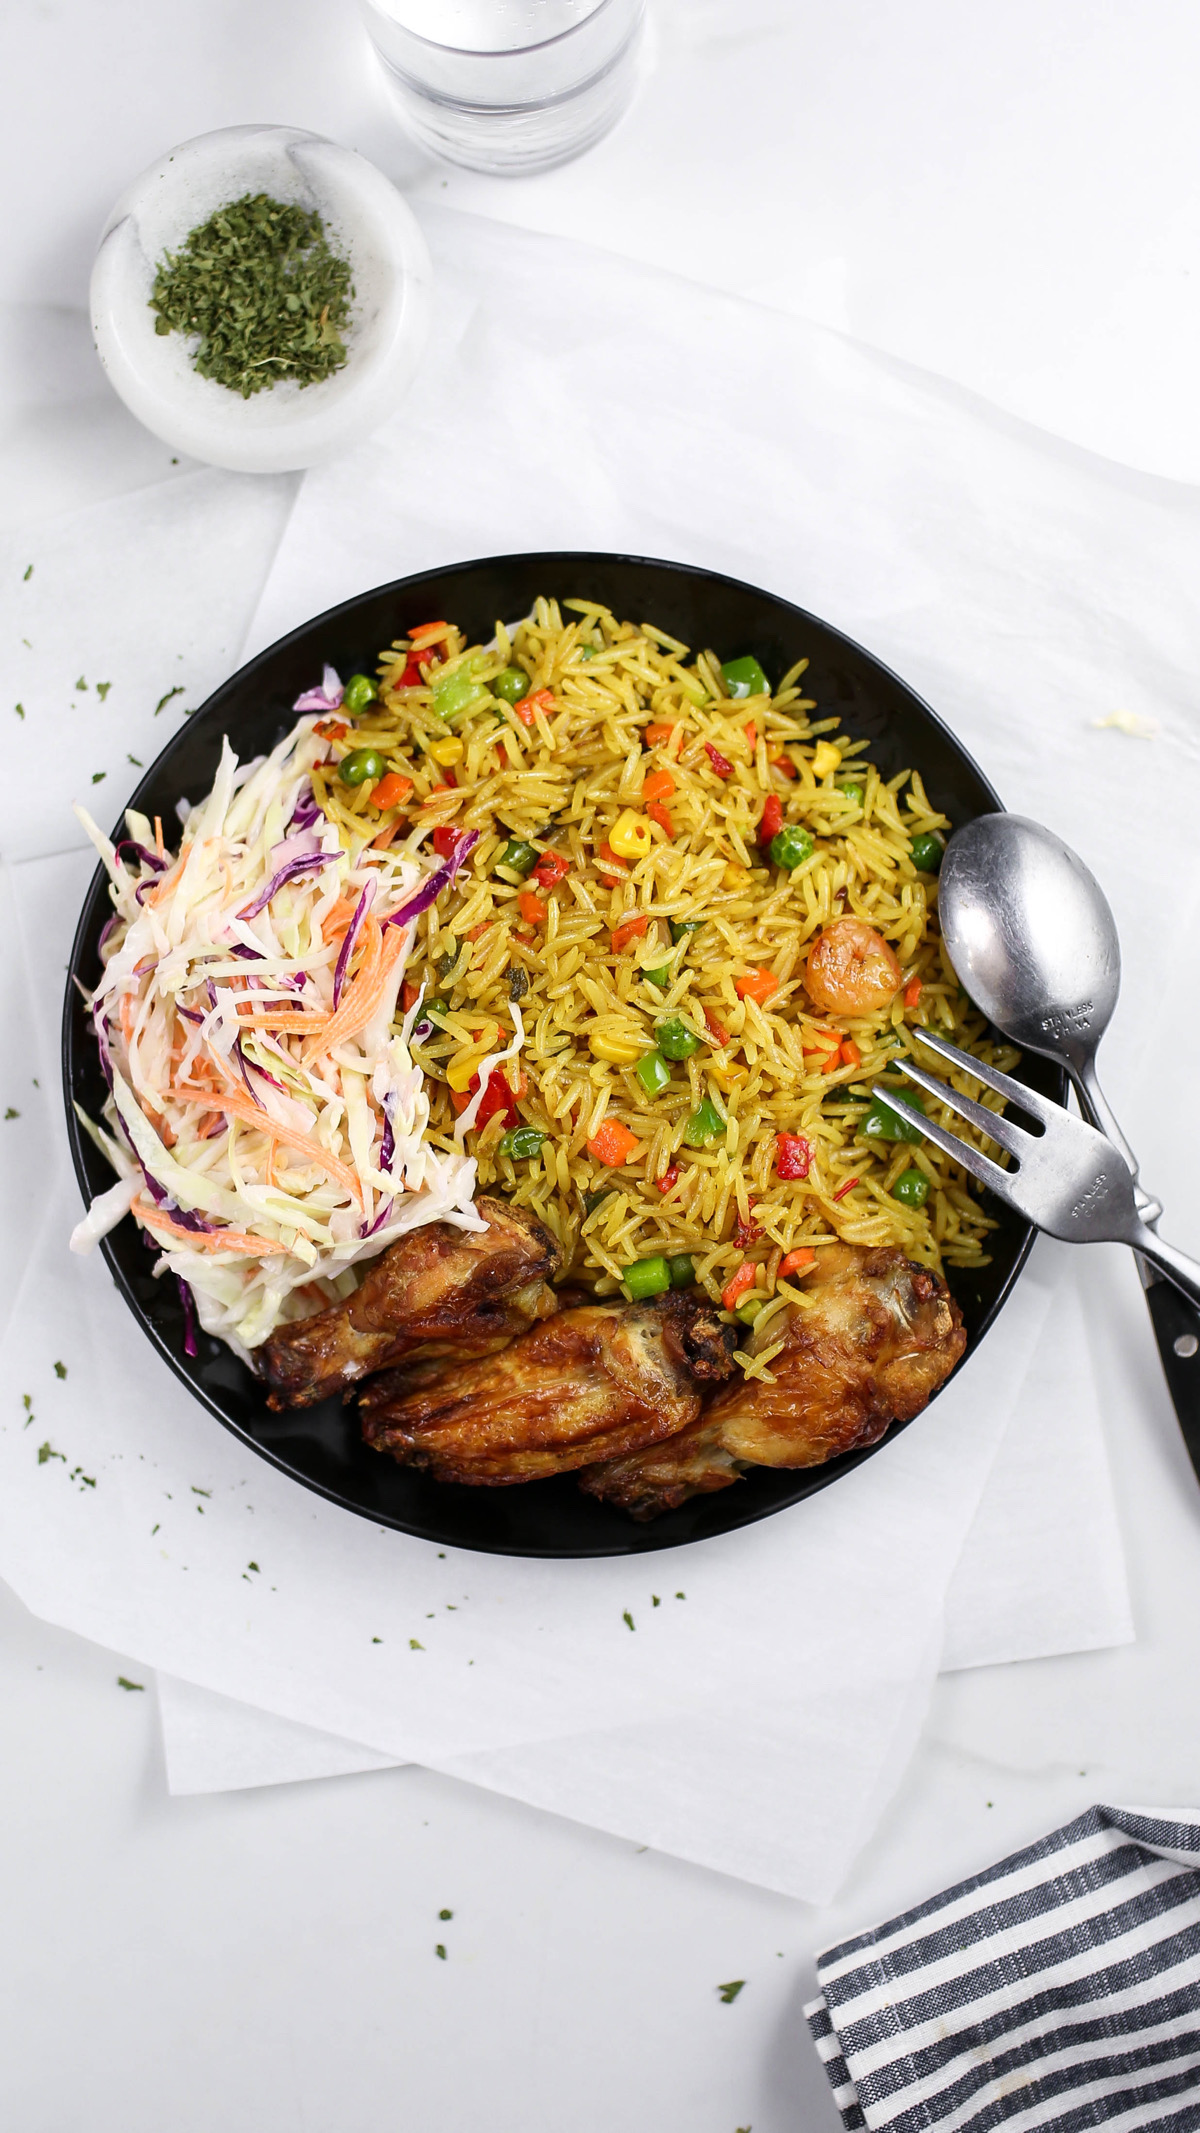 Nigerian fried rice
